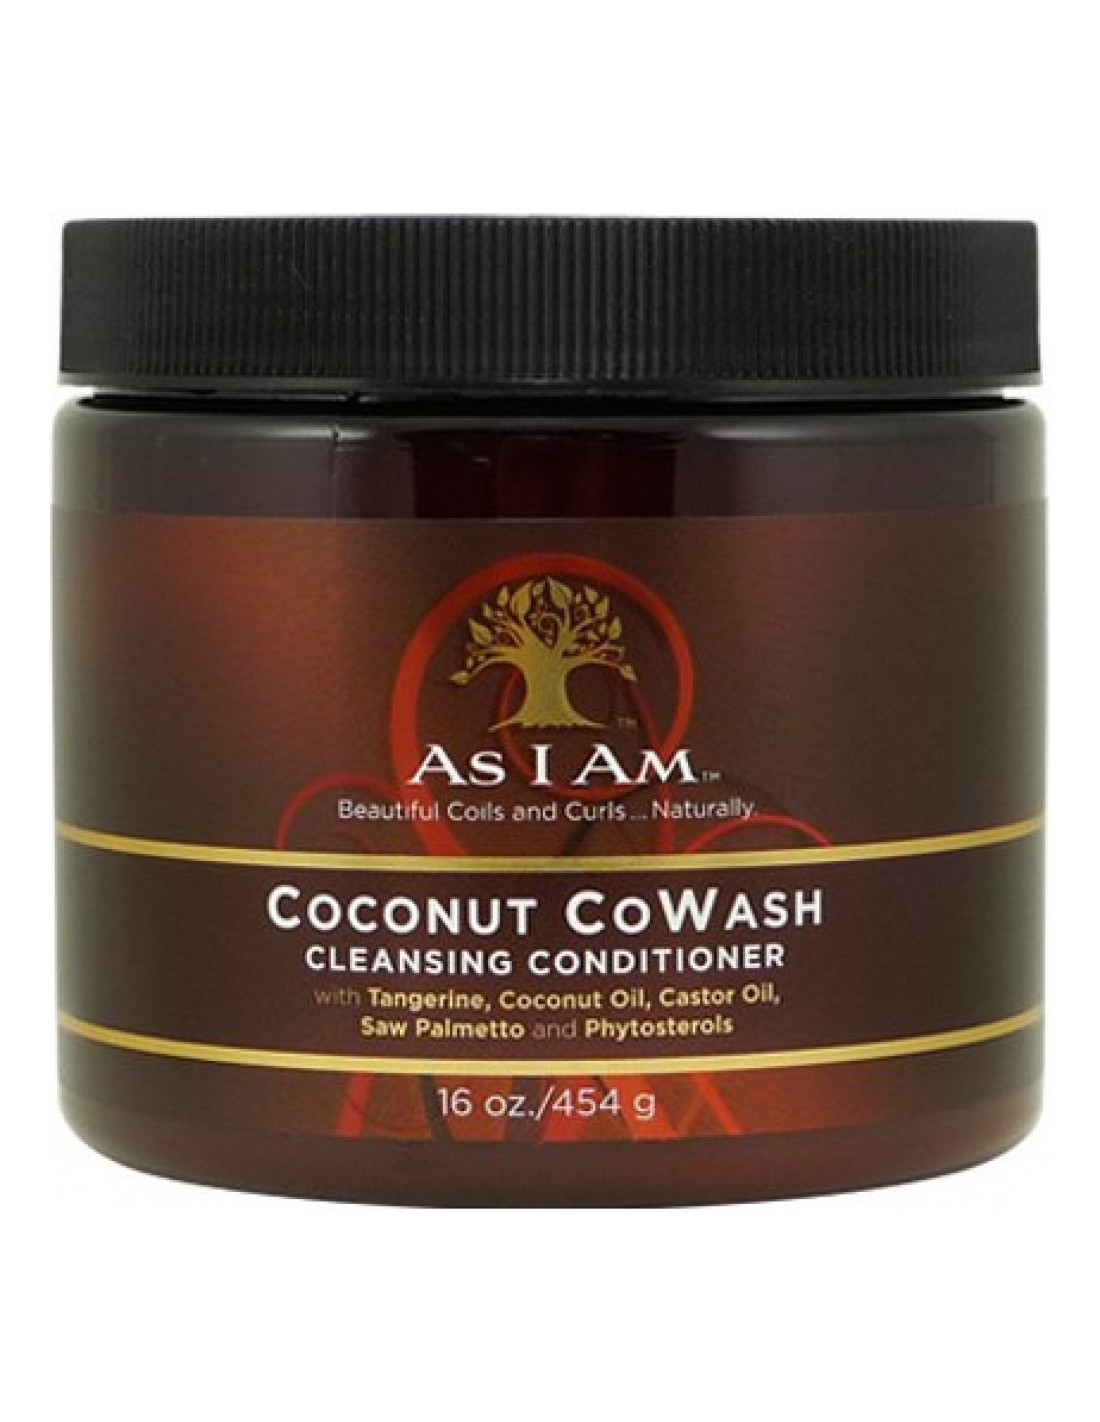 Cowash Cleansing Conditioner Coconut CoWash As I Am